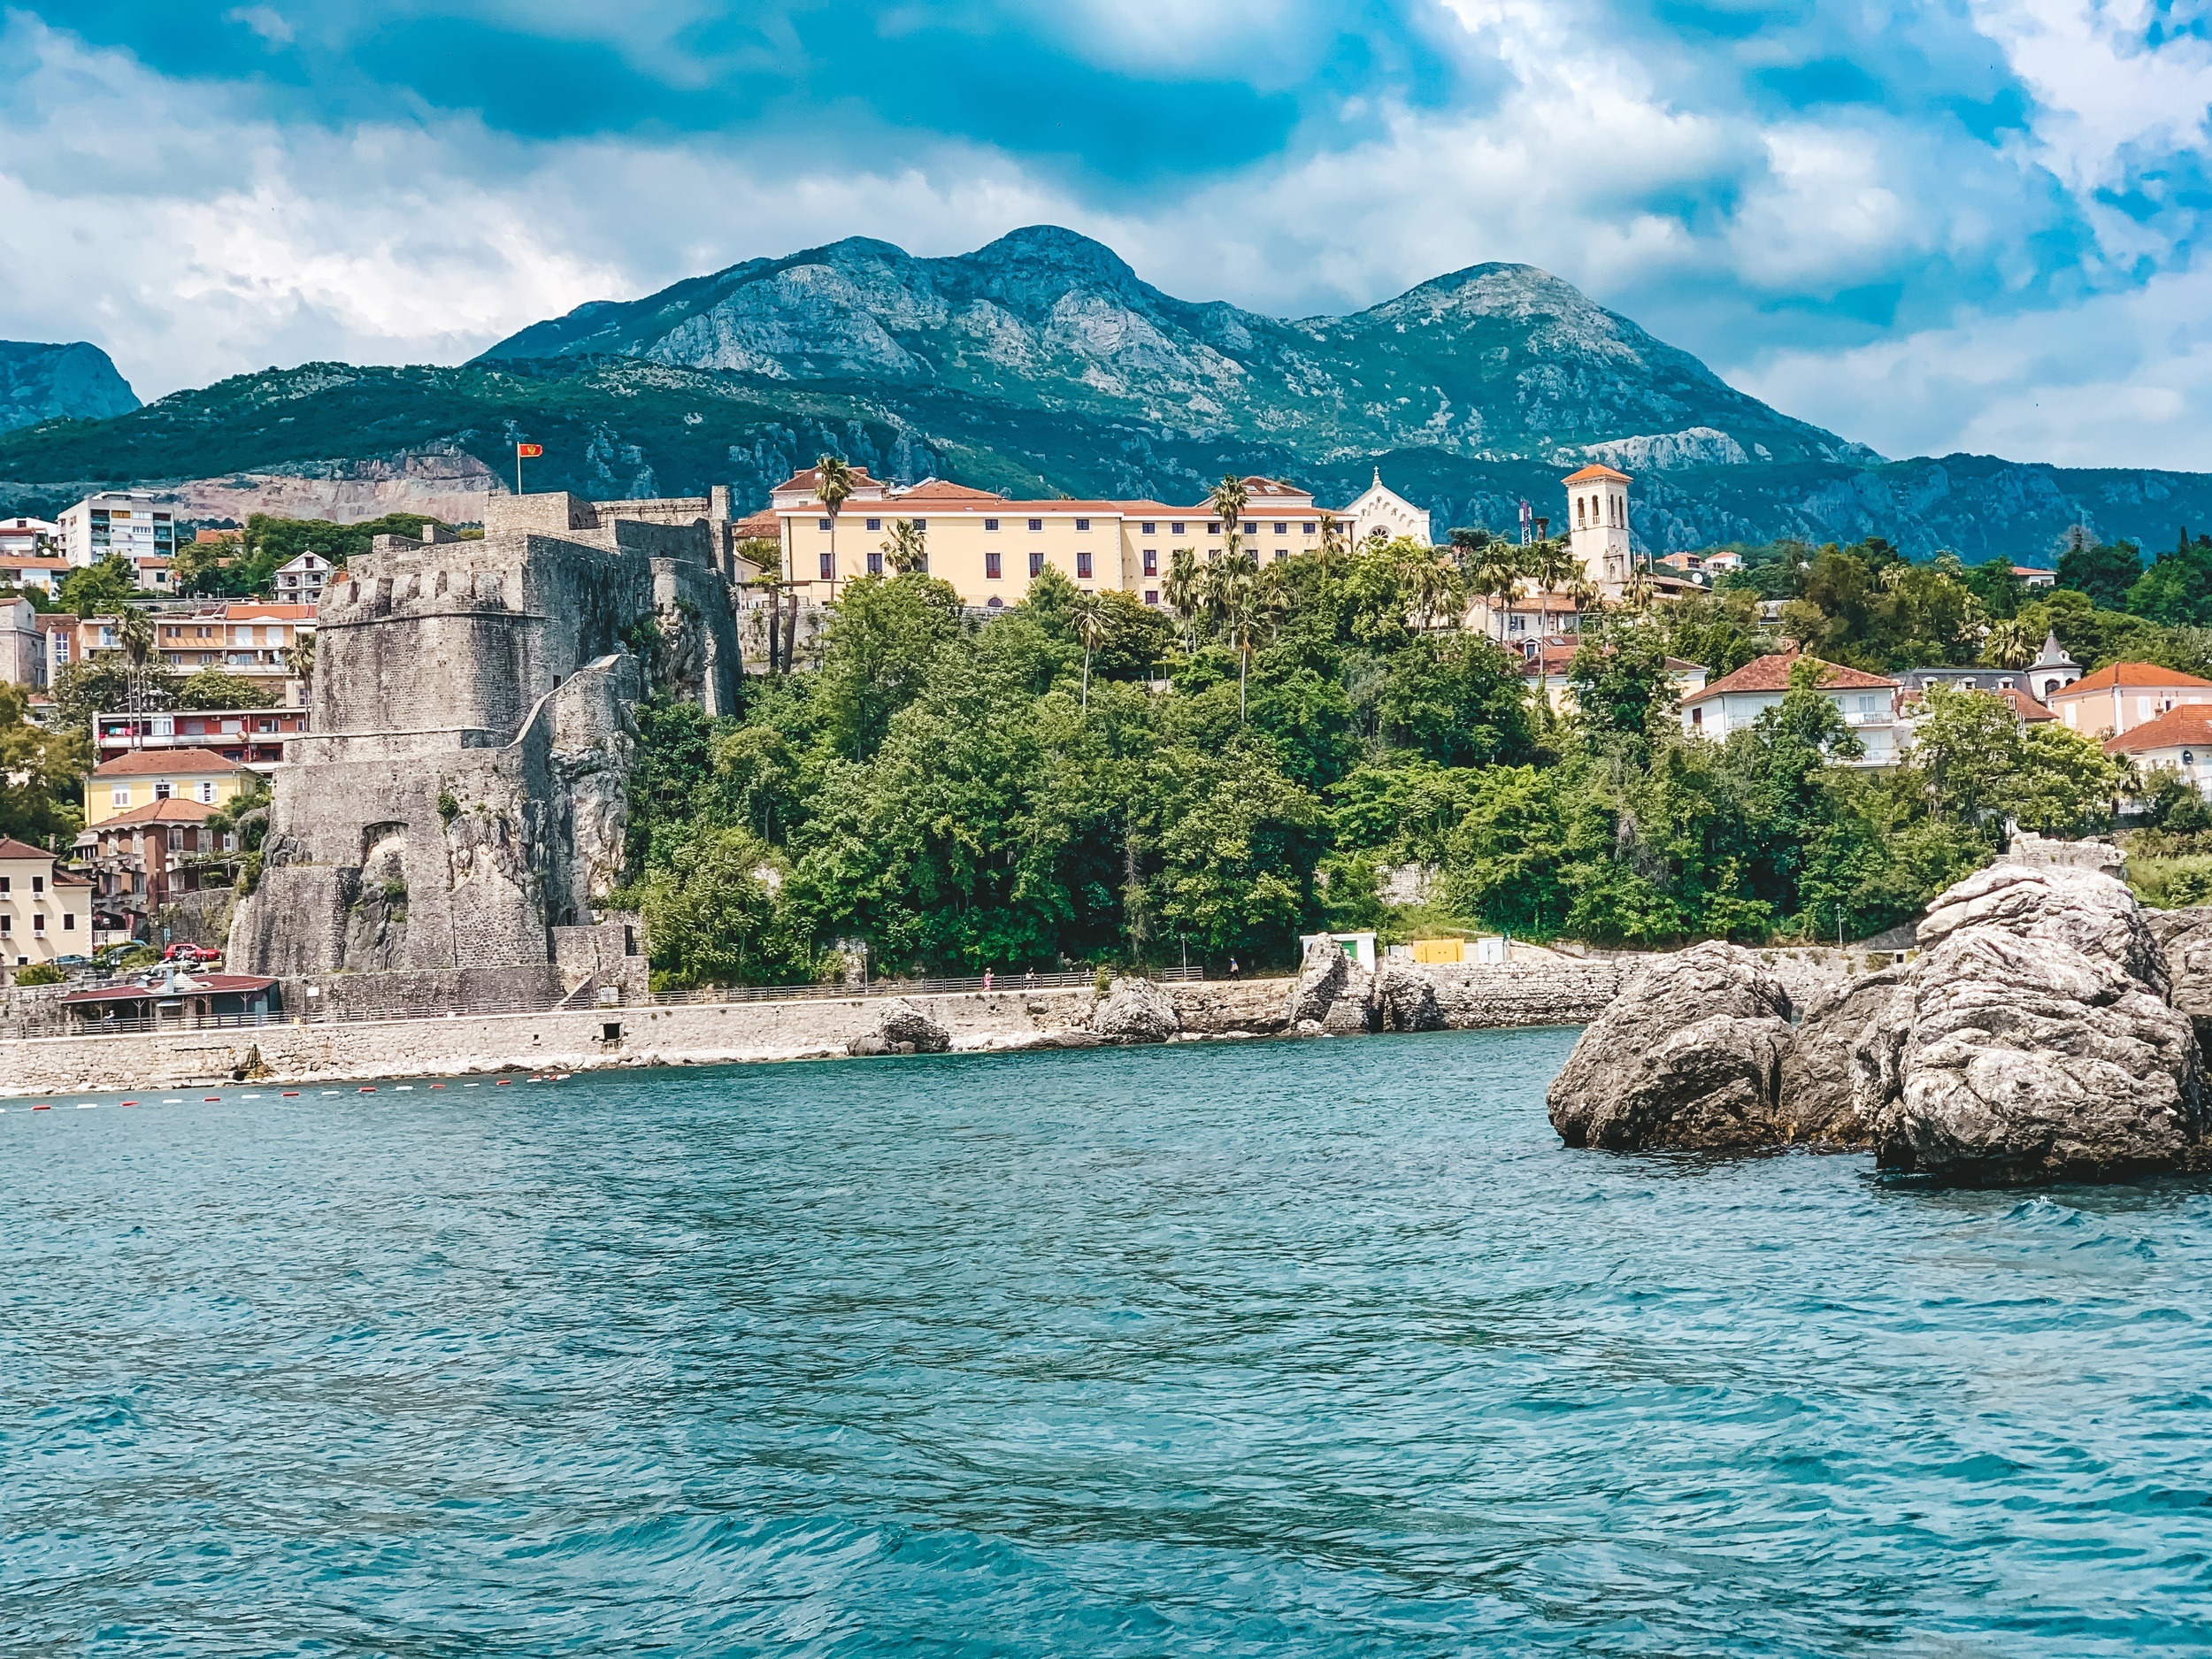 Tourist Visa For Montenegro